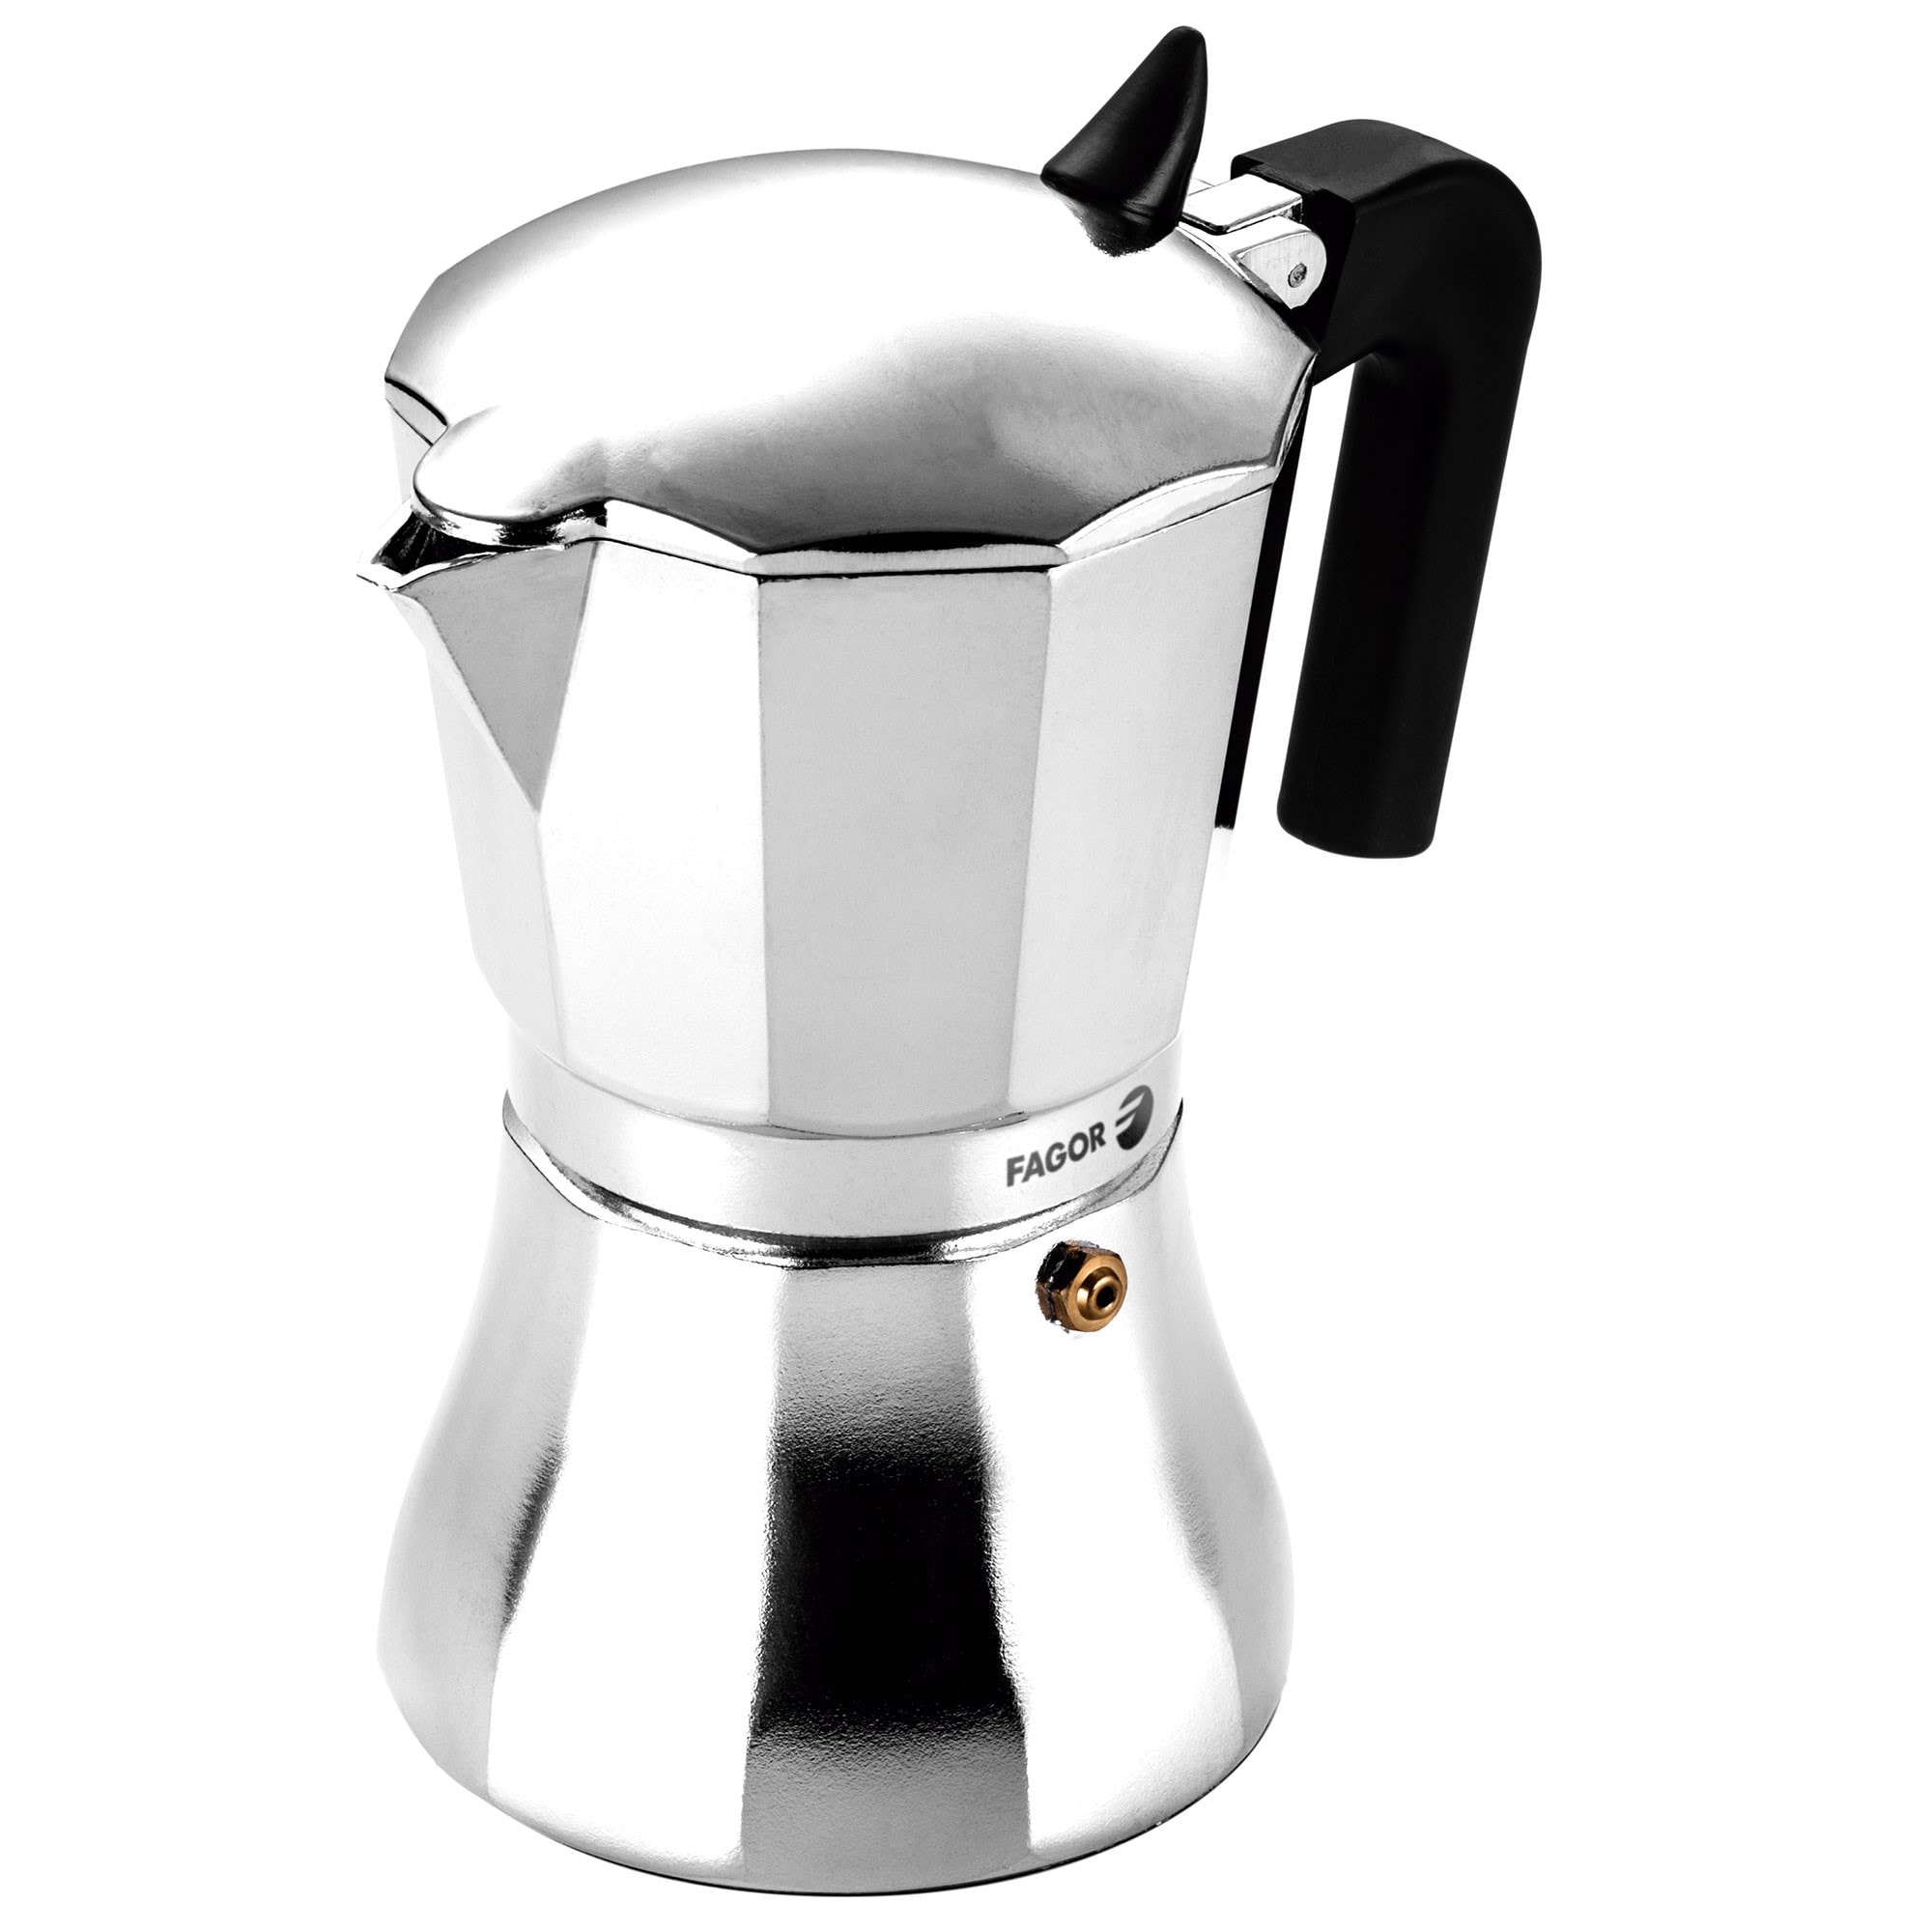 Fagor cupy cafetière expresso italienne induction aluminium 9 tasses café,  vitrocéramique, , argent FAGOR Pas Cher 